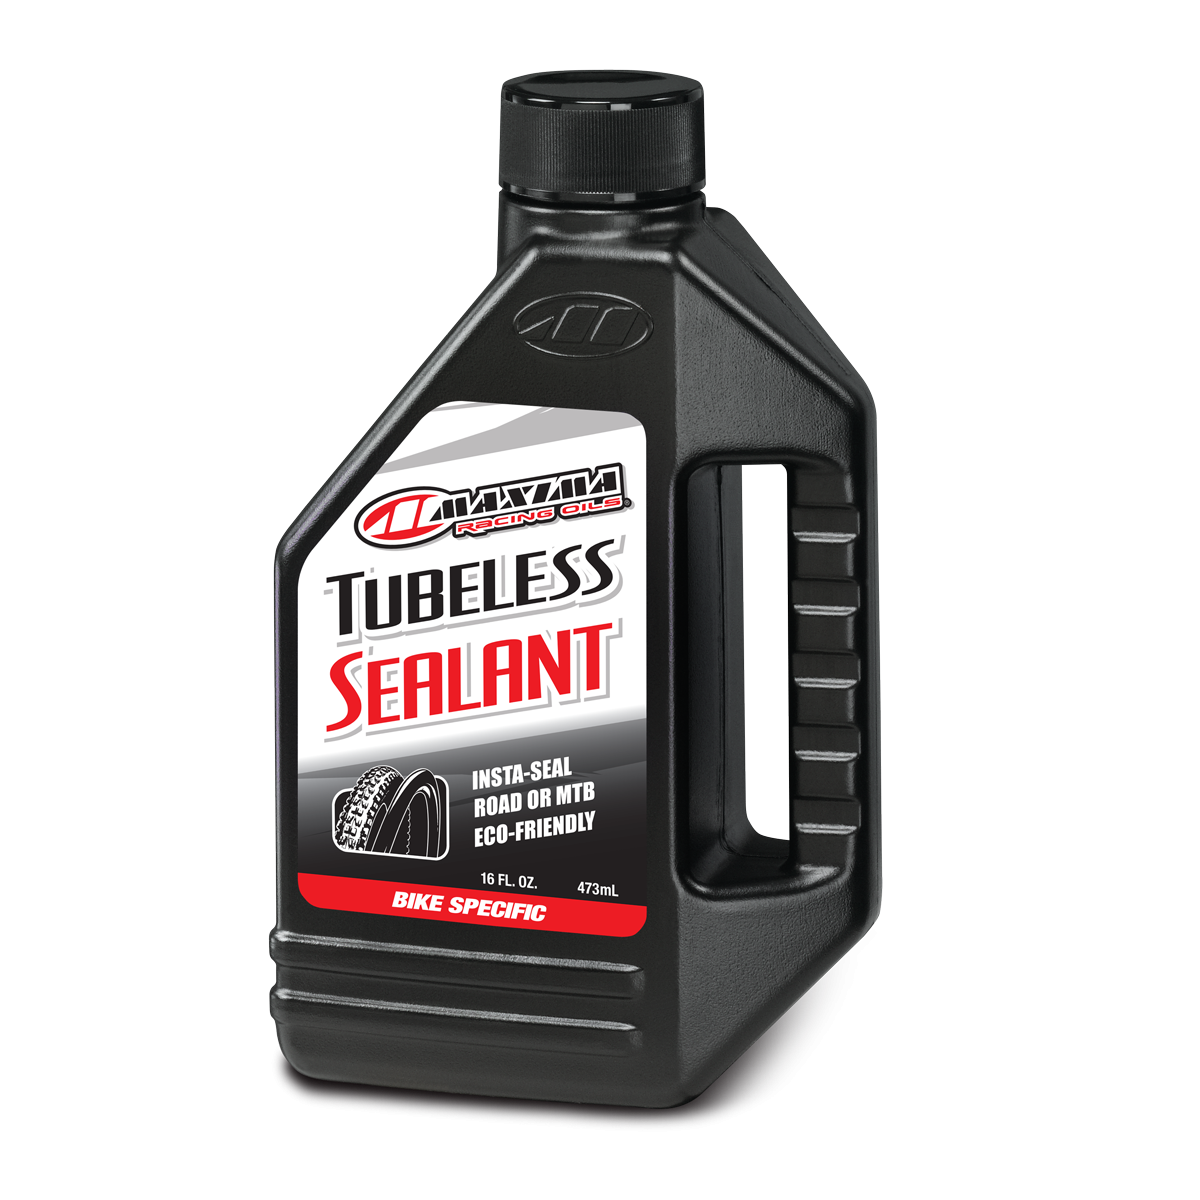 Sellante Tubeless sealant / Maxima Racing Oils